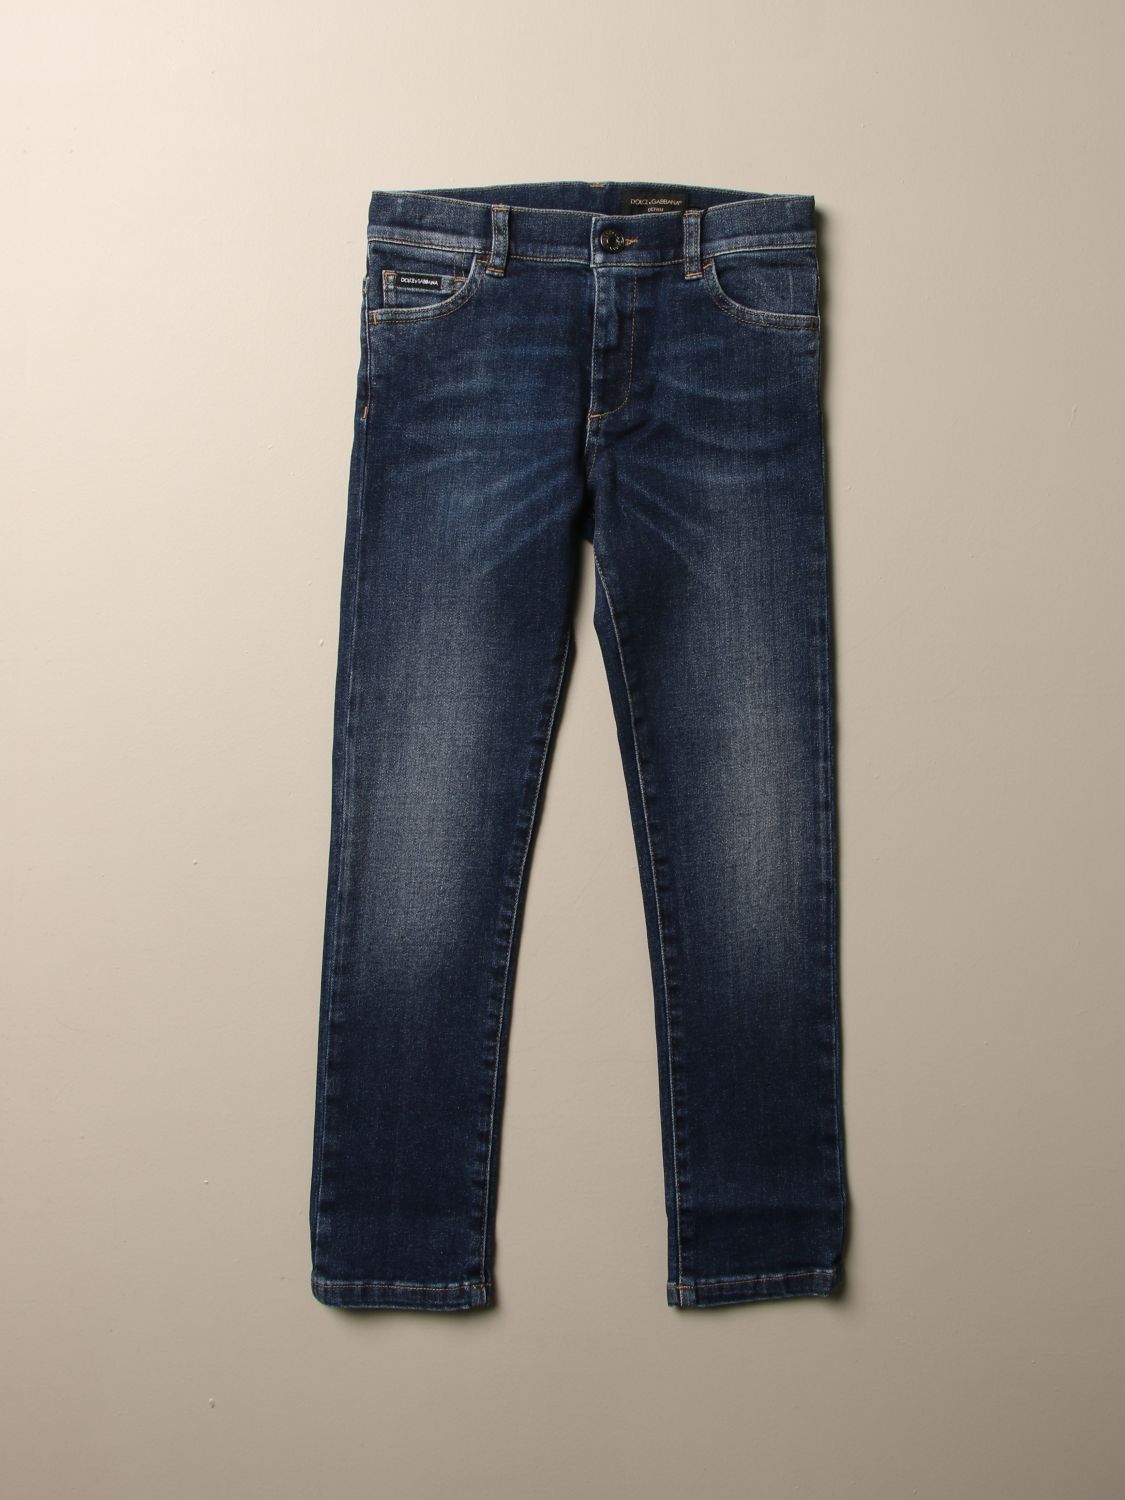 gabbana jeans